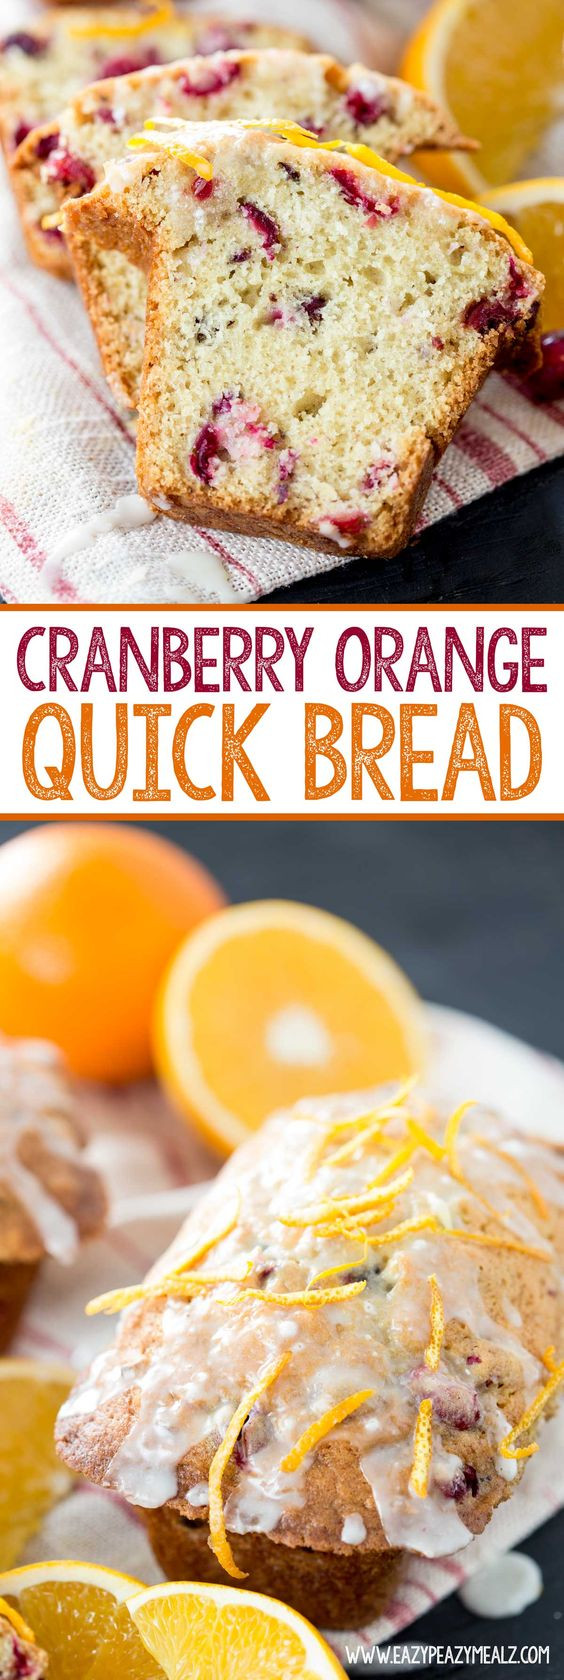 Holiday Quick Bread Recipes
 Cranberry Orange Quick Bread Recipe